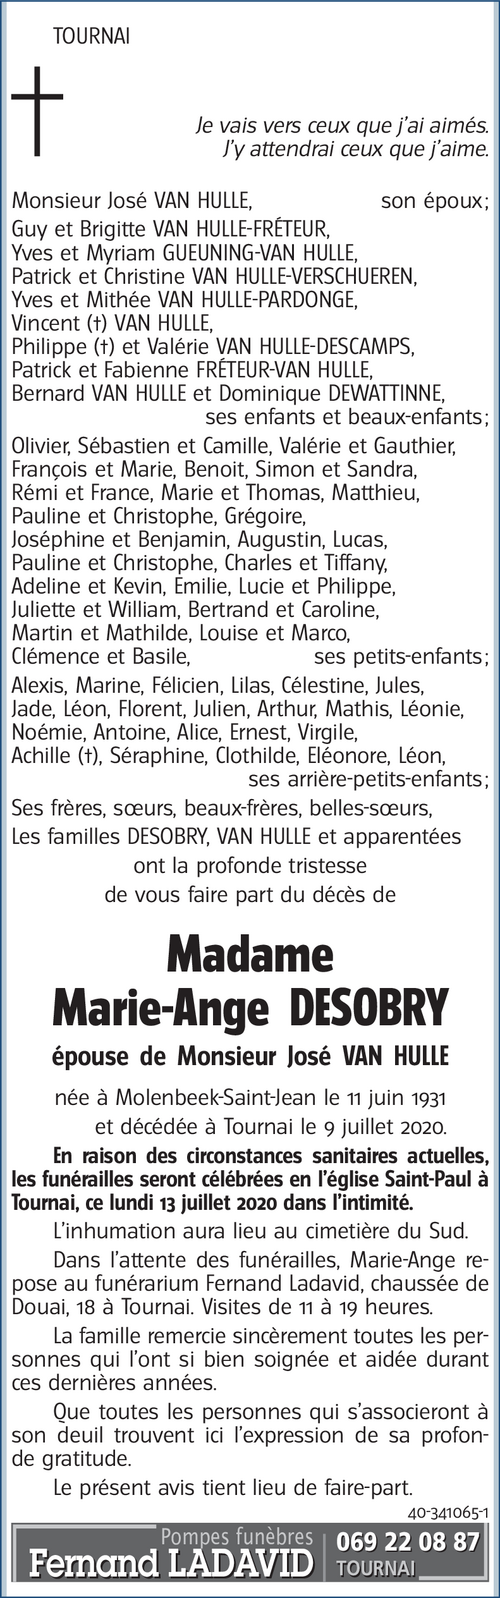 Marie-Ange DESOBRY